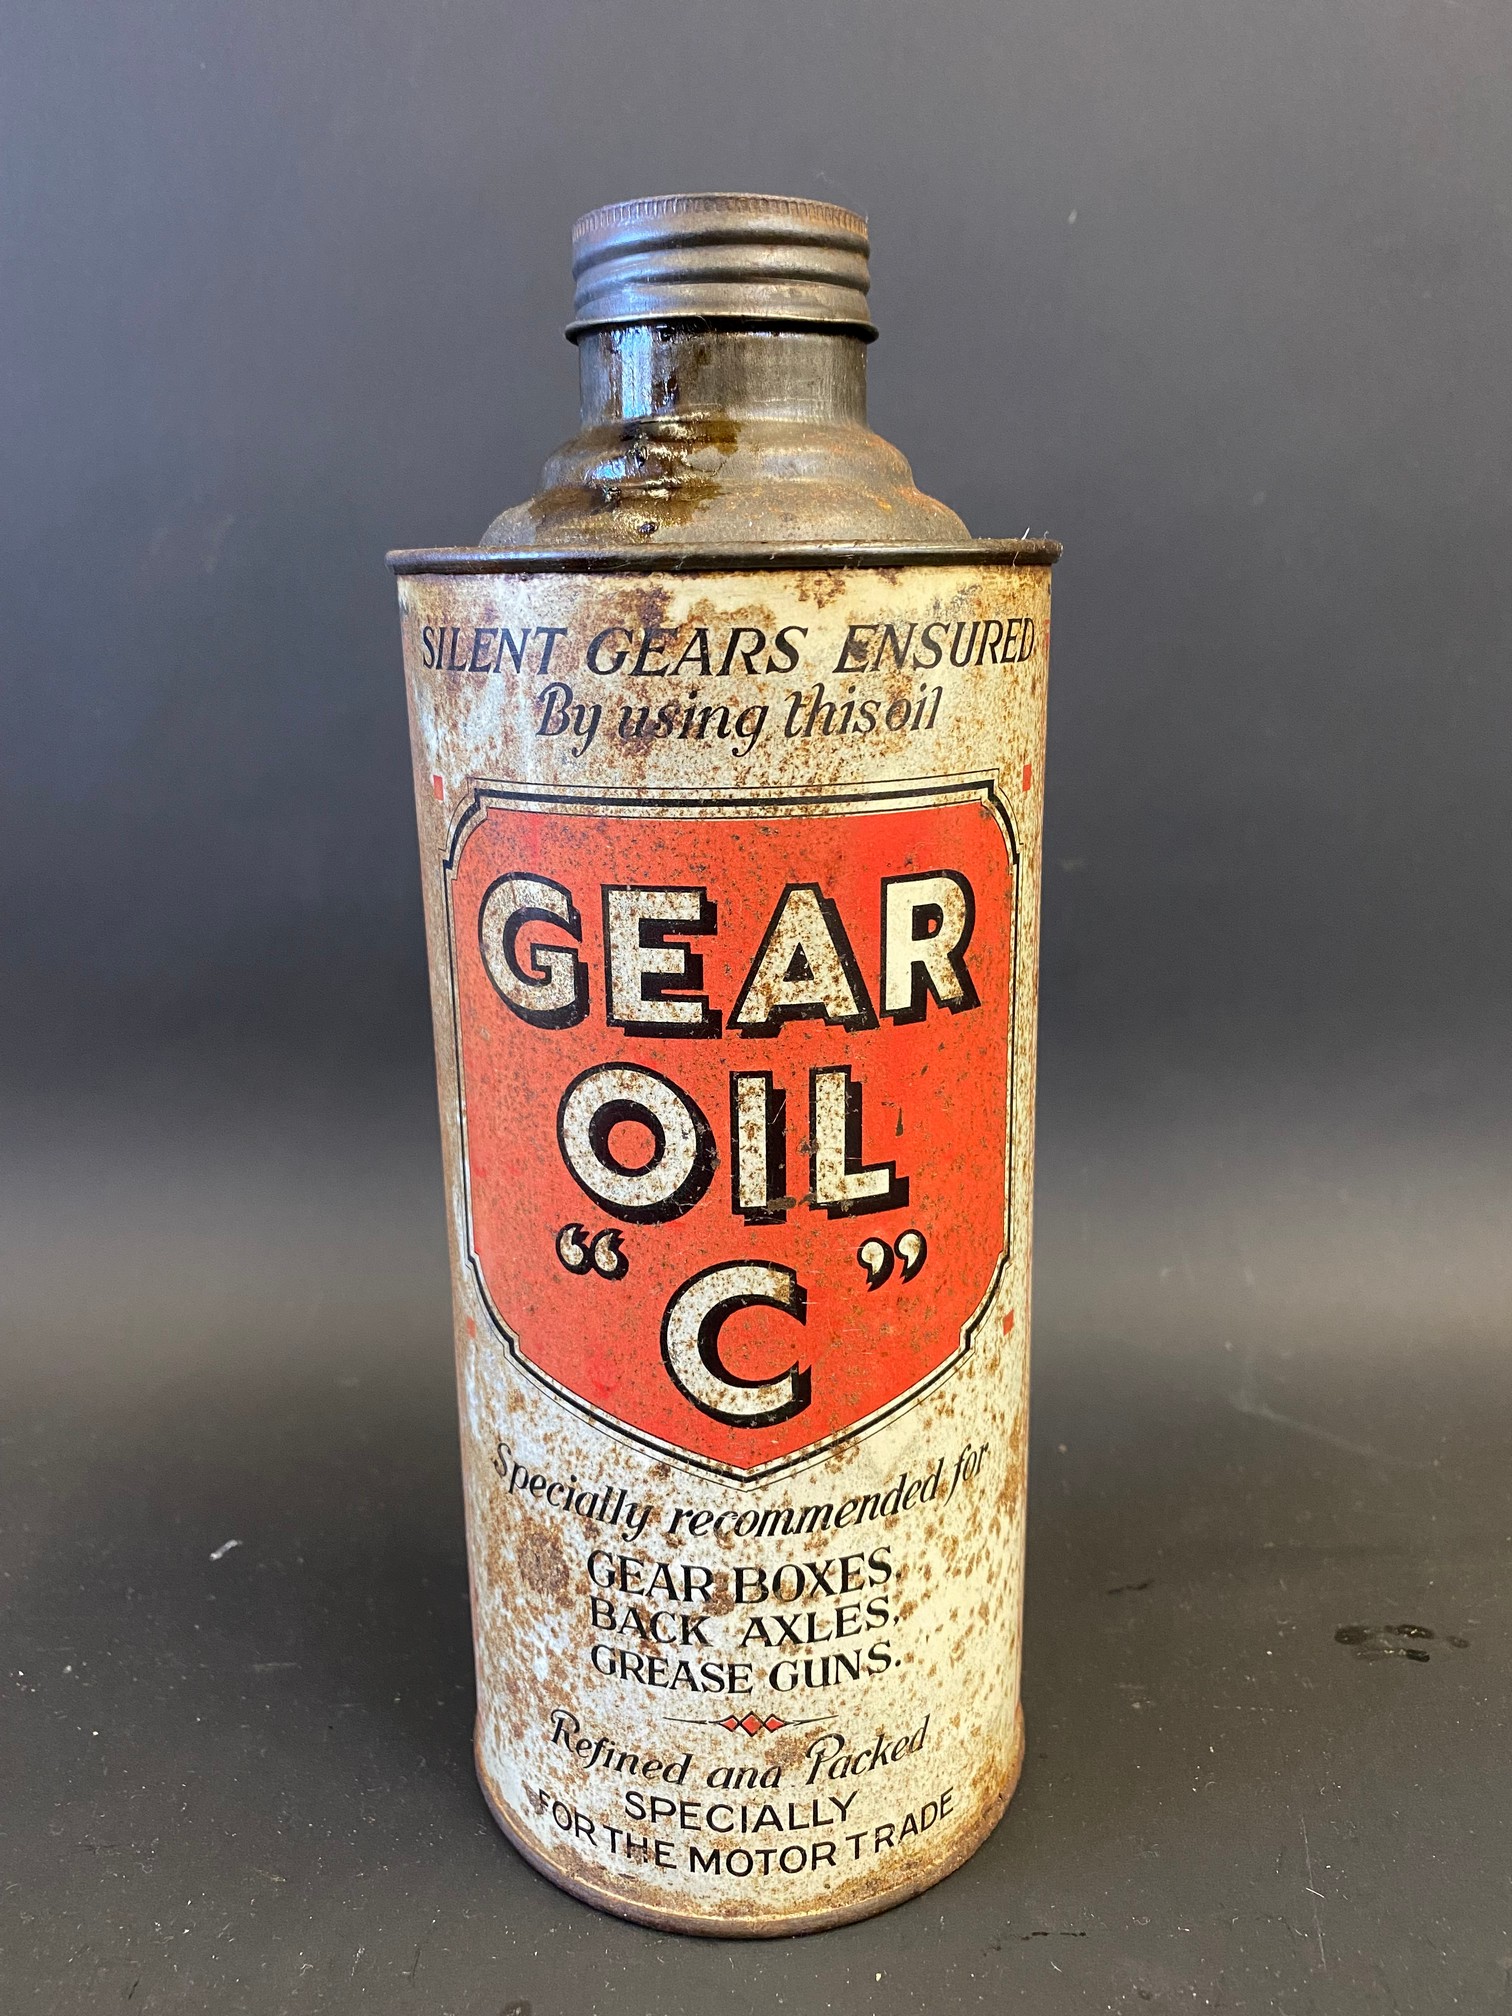 A Gear Oil 'C' quart cylindrical oil can.